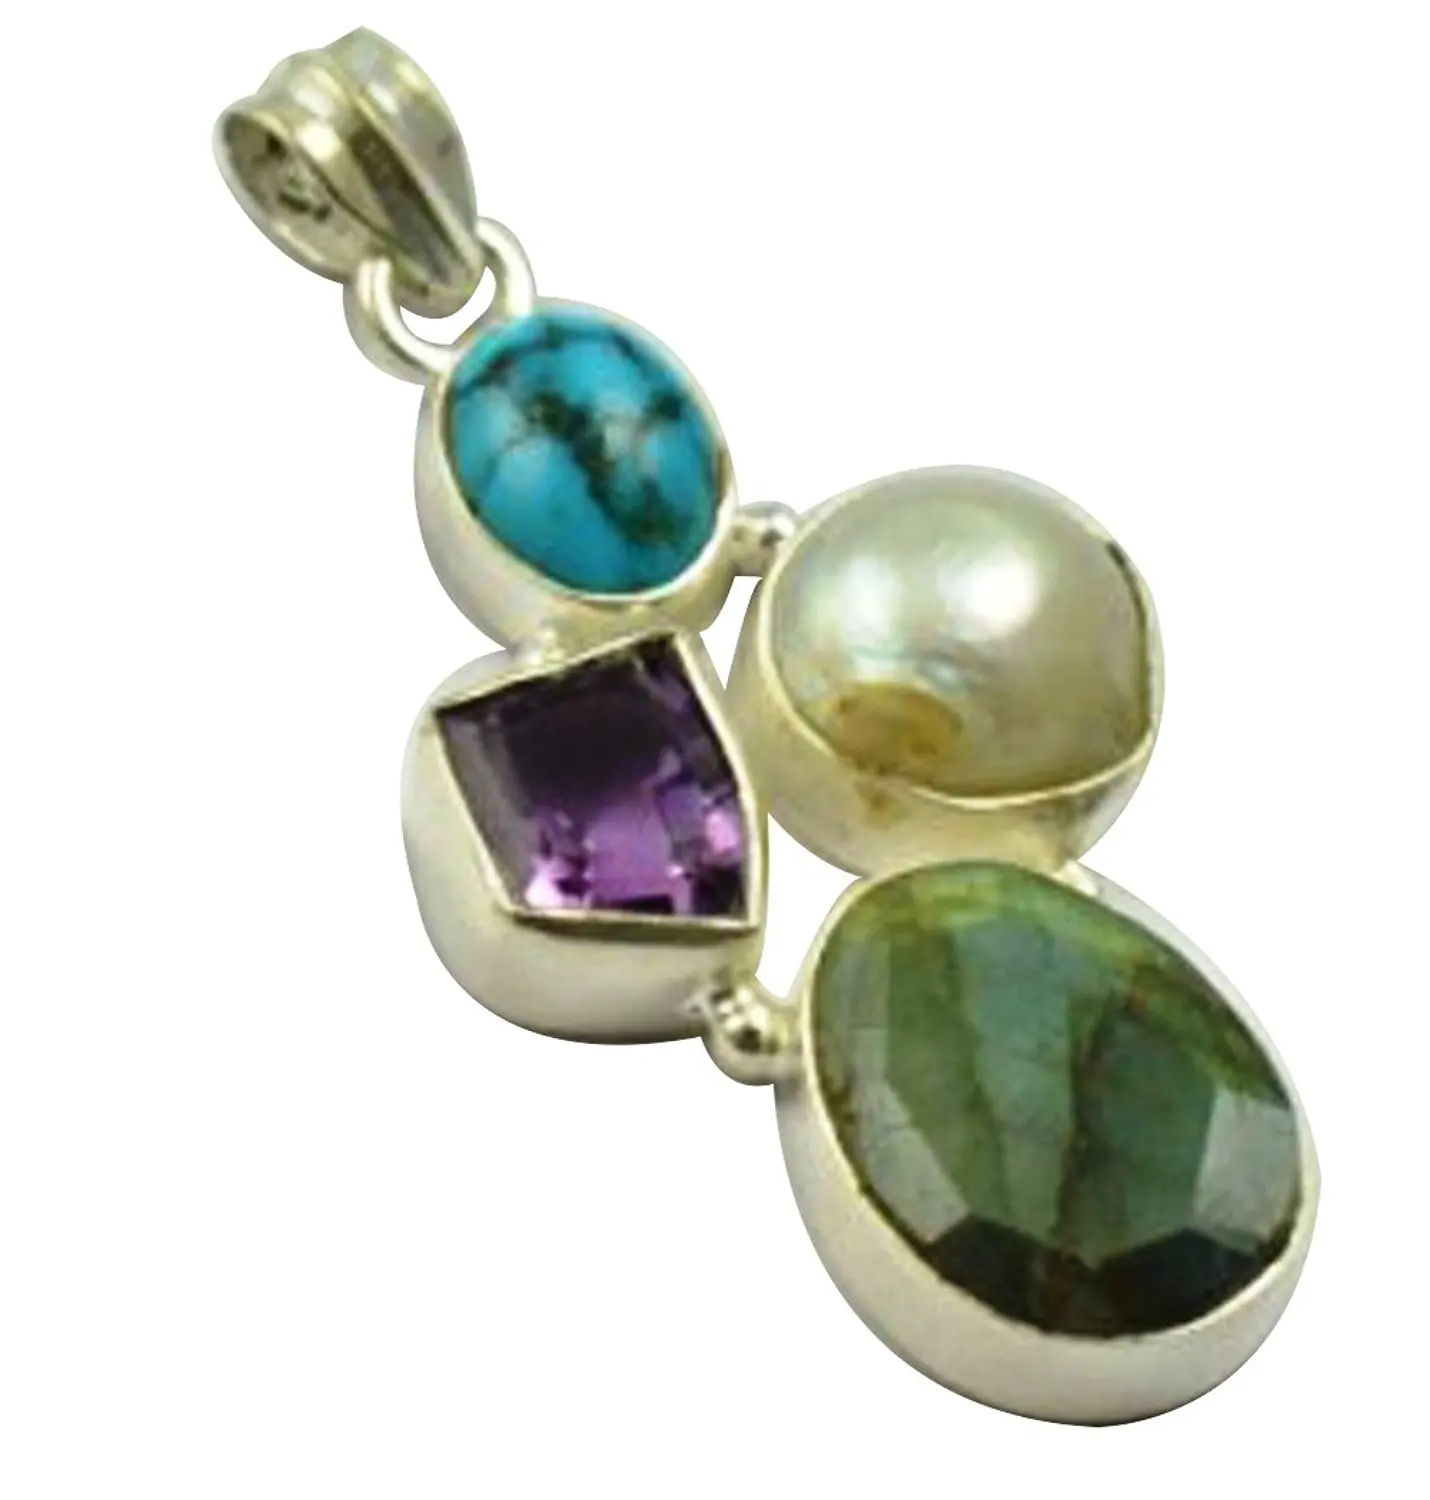 AAA quality gemstone earrings 925 Sterling Silver Aqua Chalcedony fine Jewelry